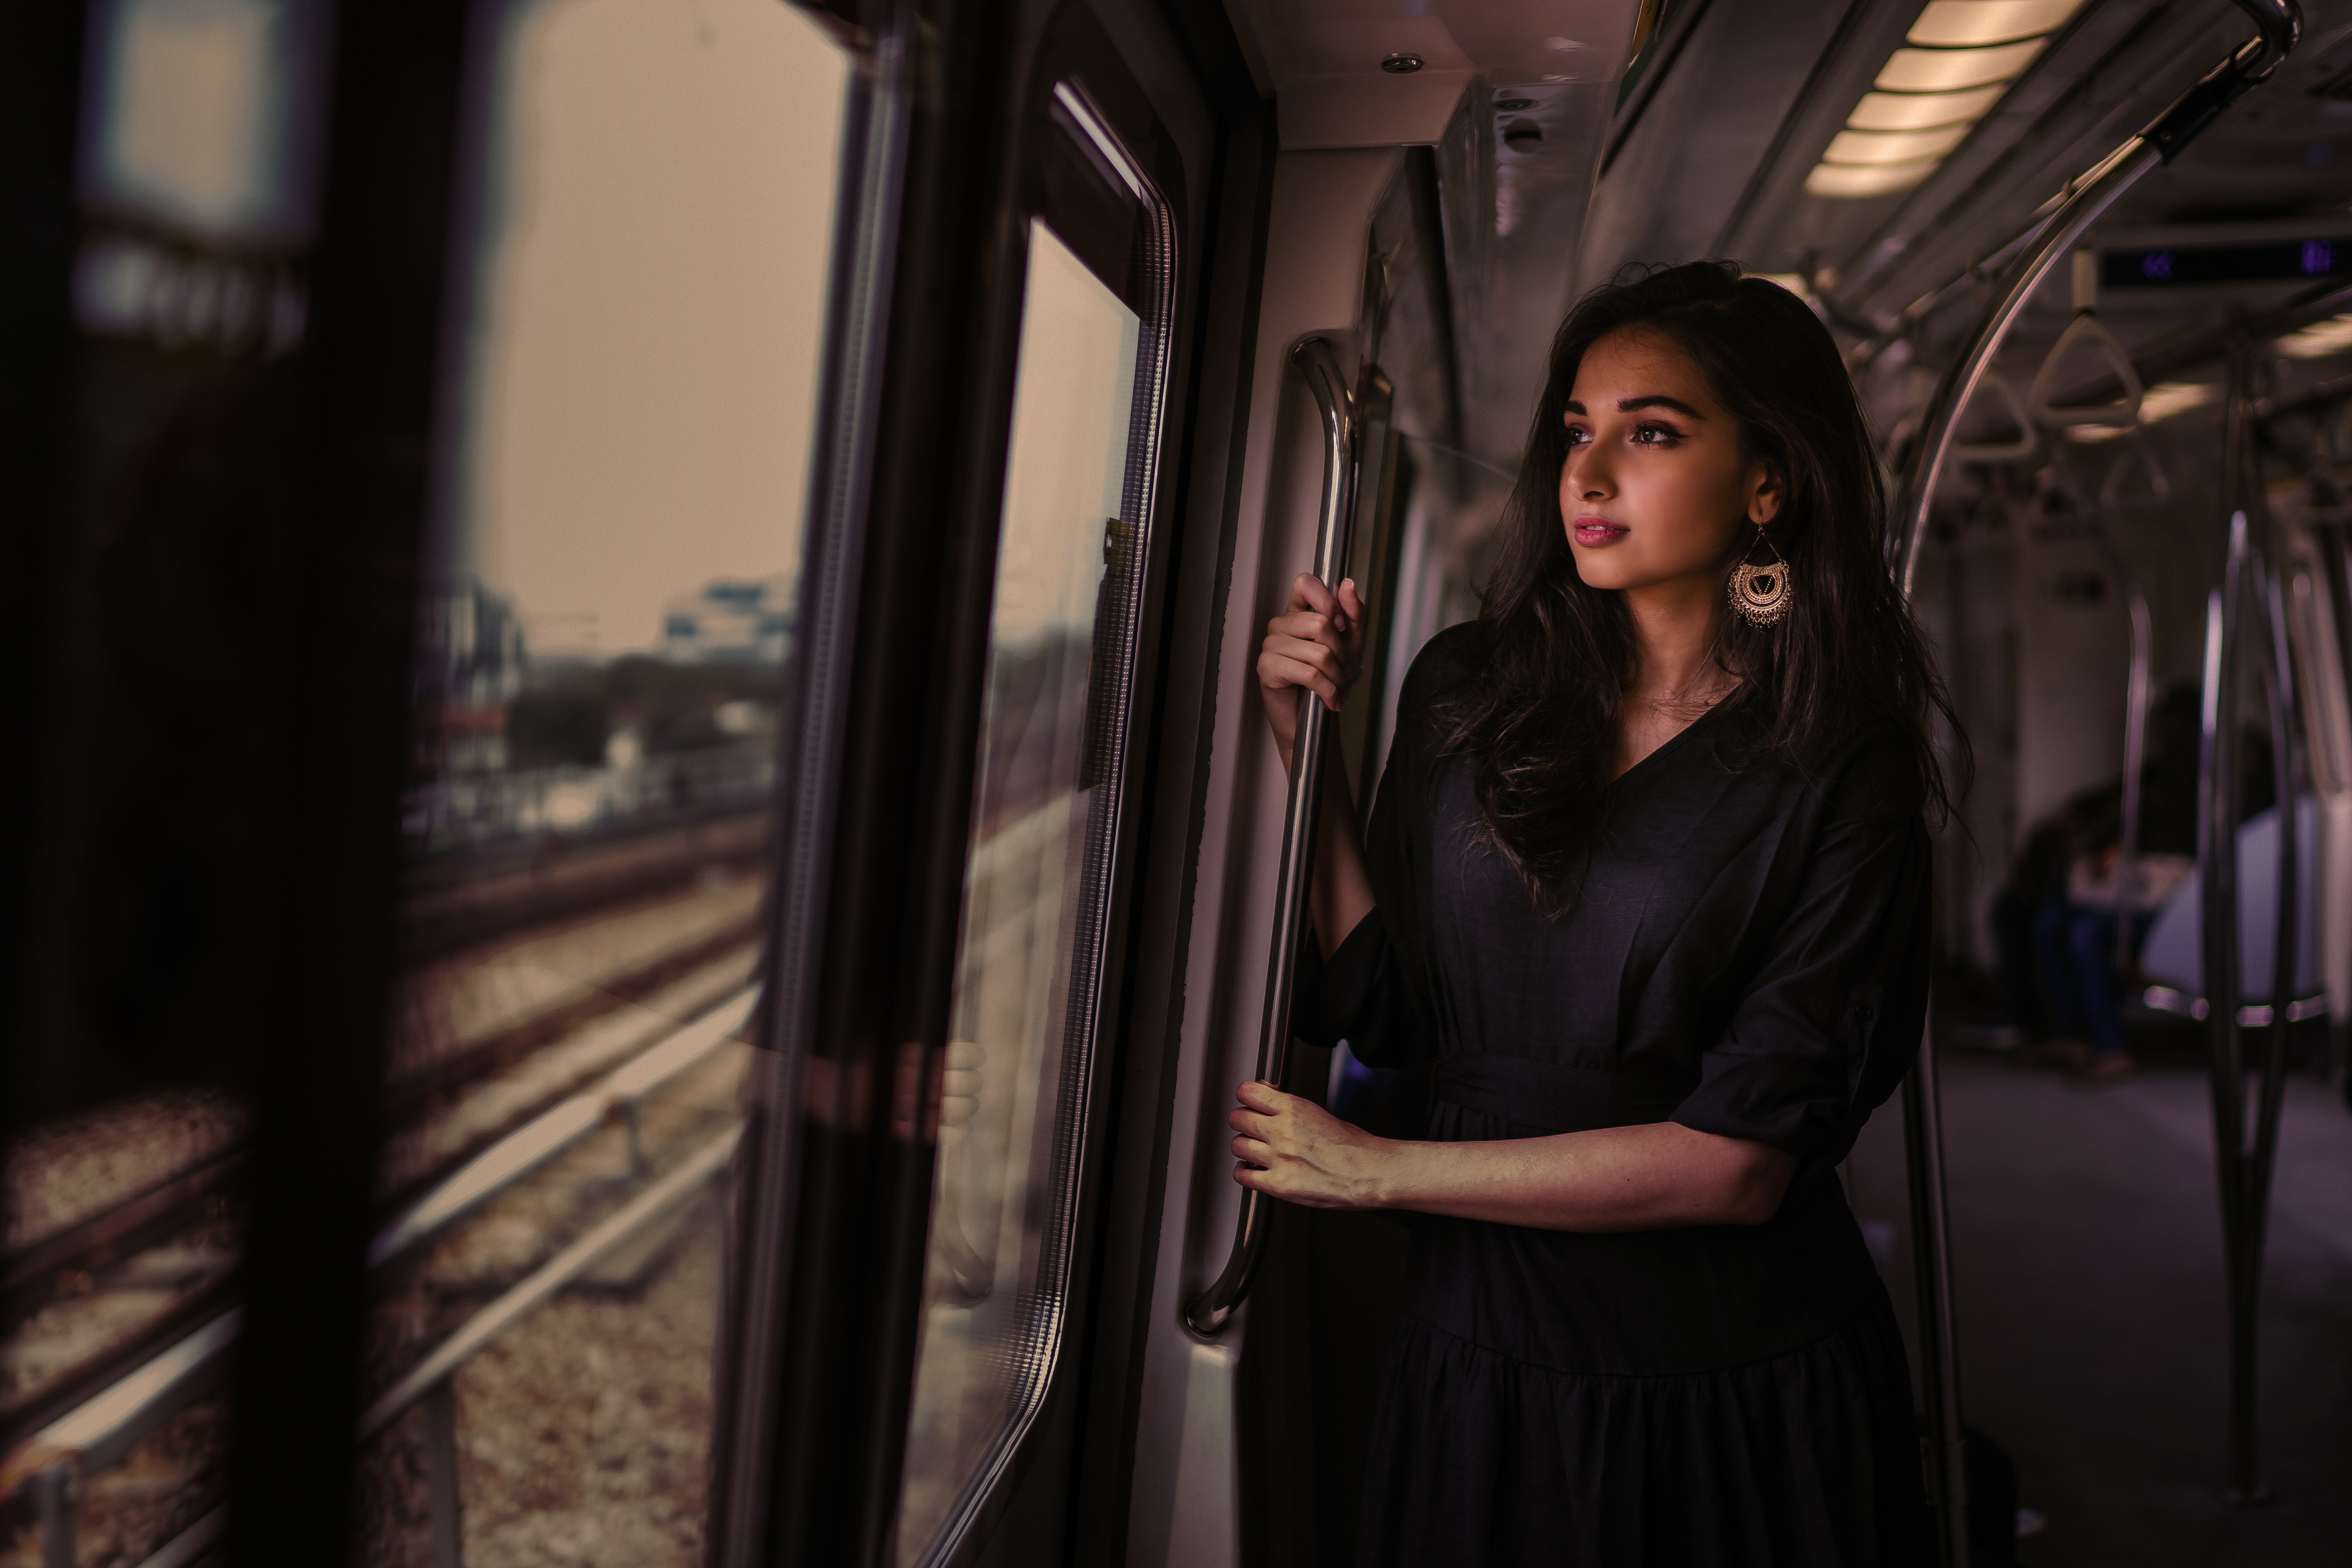 women standing in train holding metal rail while looking outside 1575665254 - Women Standing In Train Holding Metal Rail While Looking Outside -